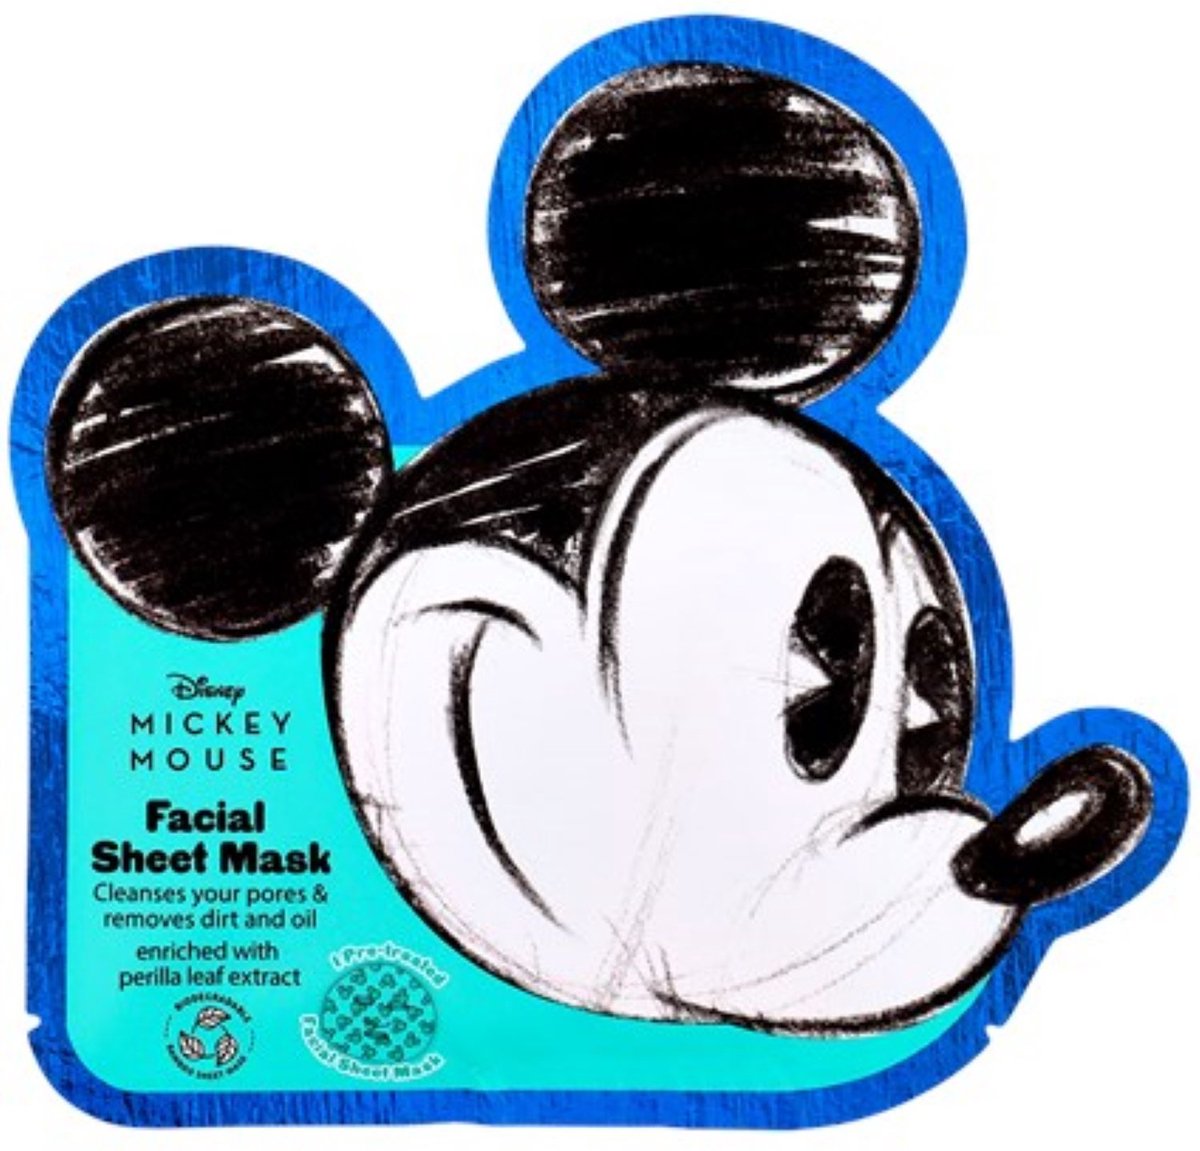 Disney - facial sheet mask Mickey Mouse - reinigend gezichtsmasker - masker verrijkt met perilla blad